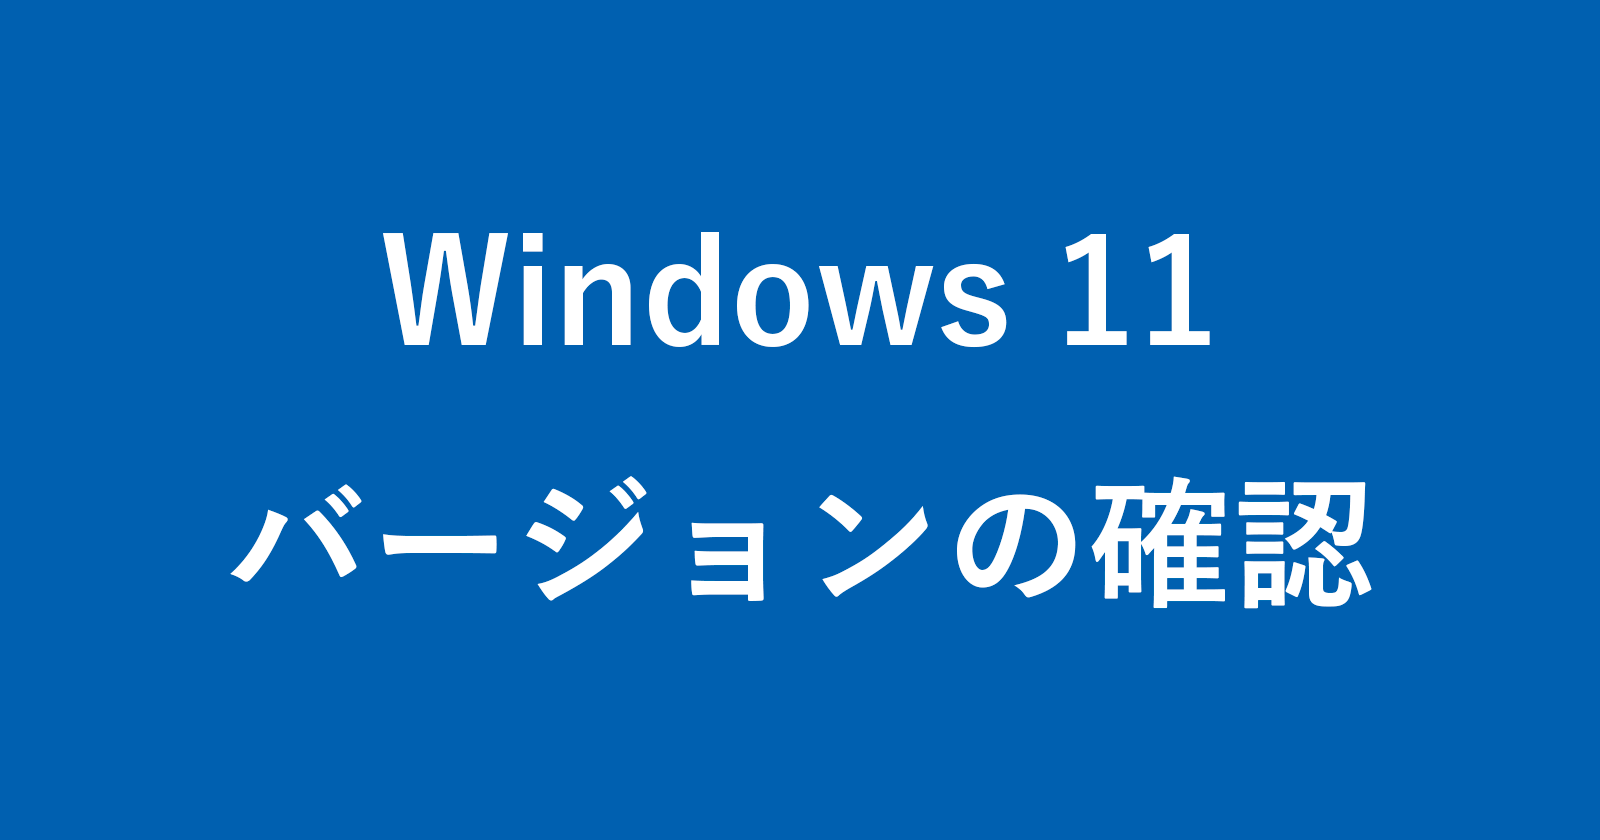 windows 11 version